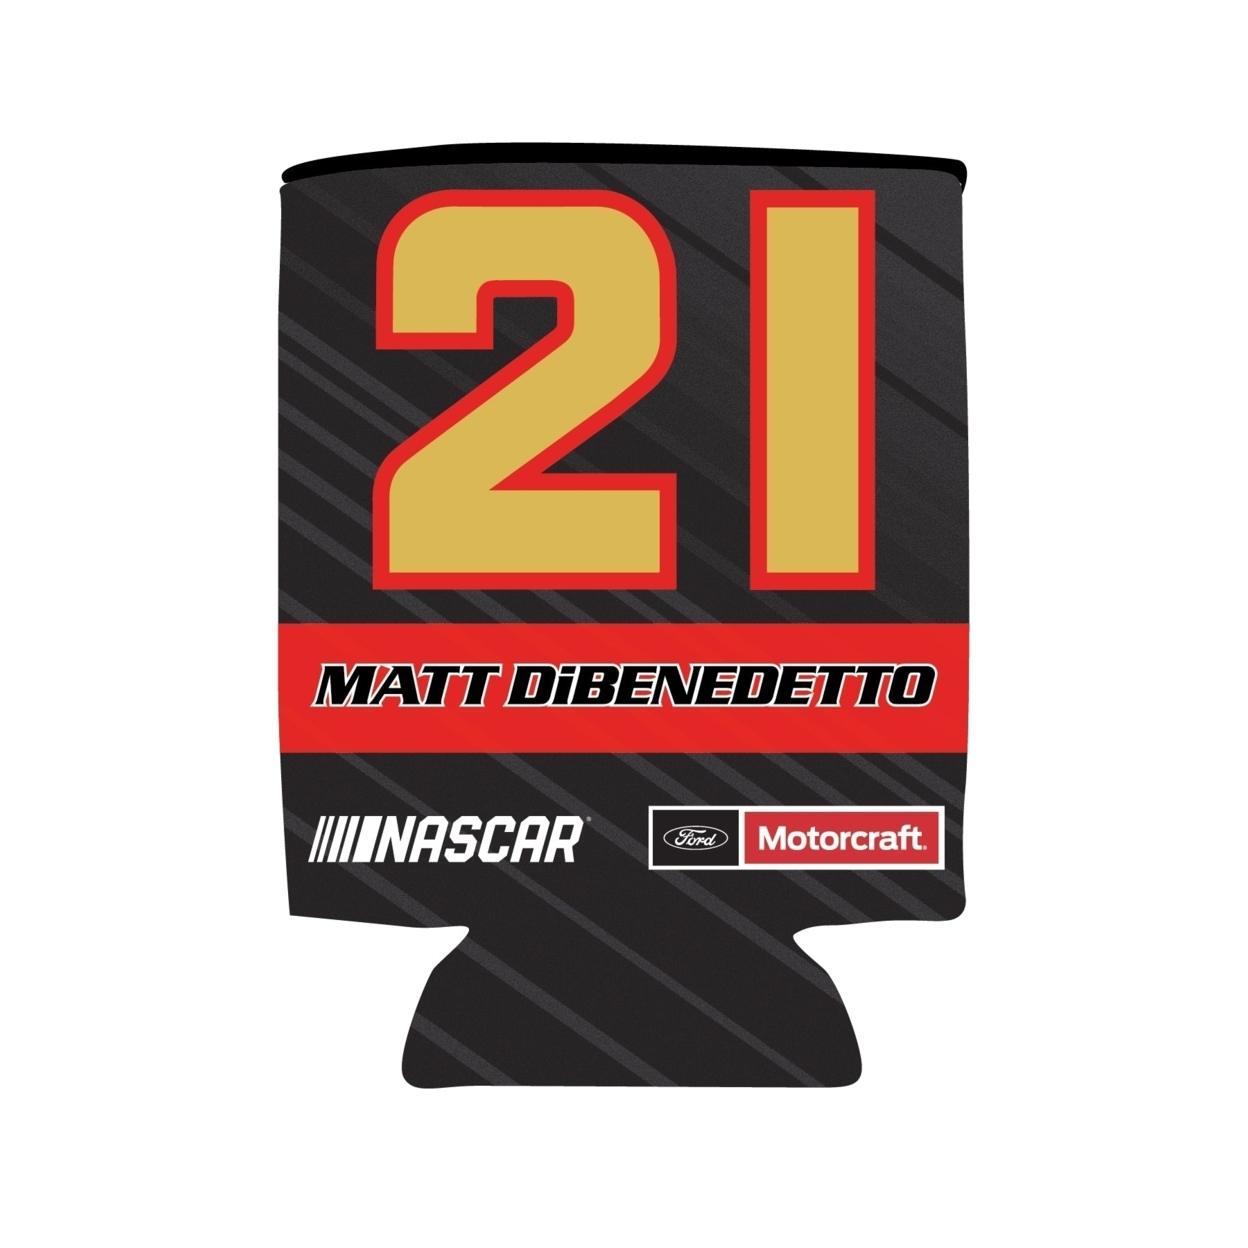 Matt DiBenedetto #21 NASCAR Cup Series Can Hugger New For 2021